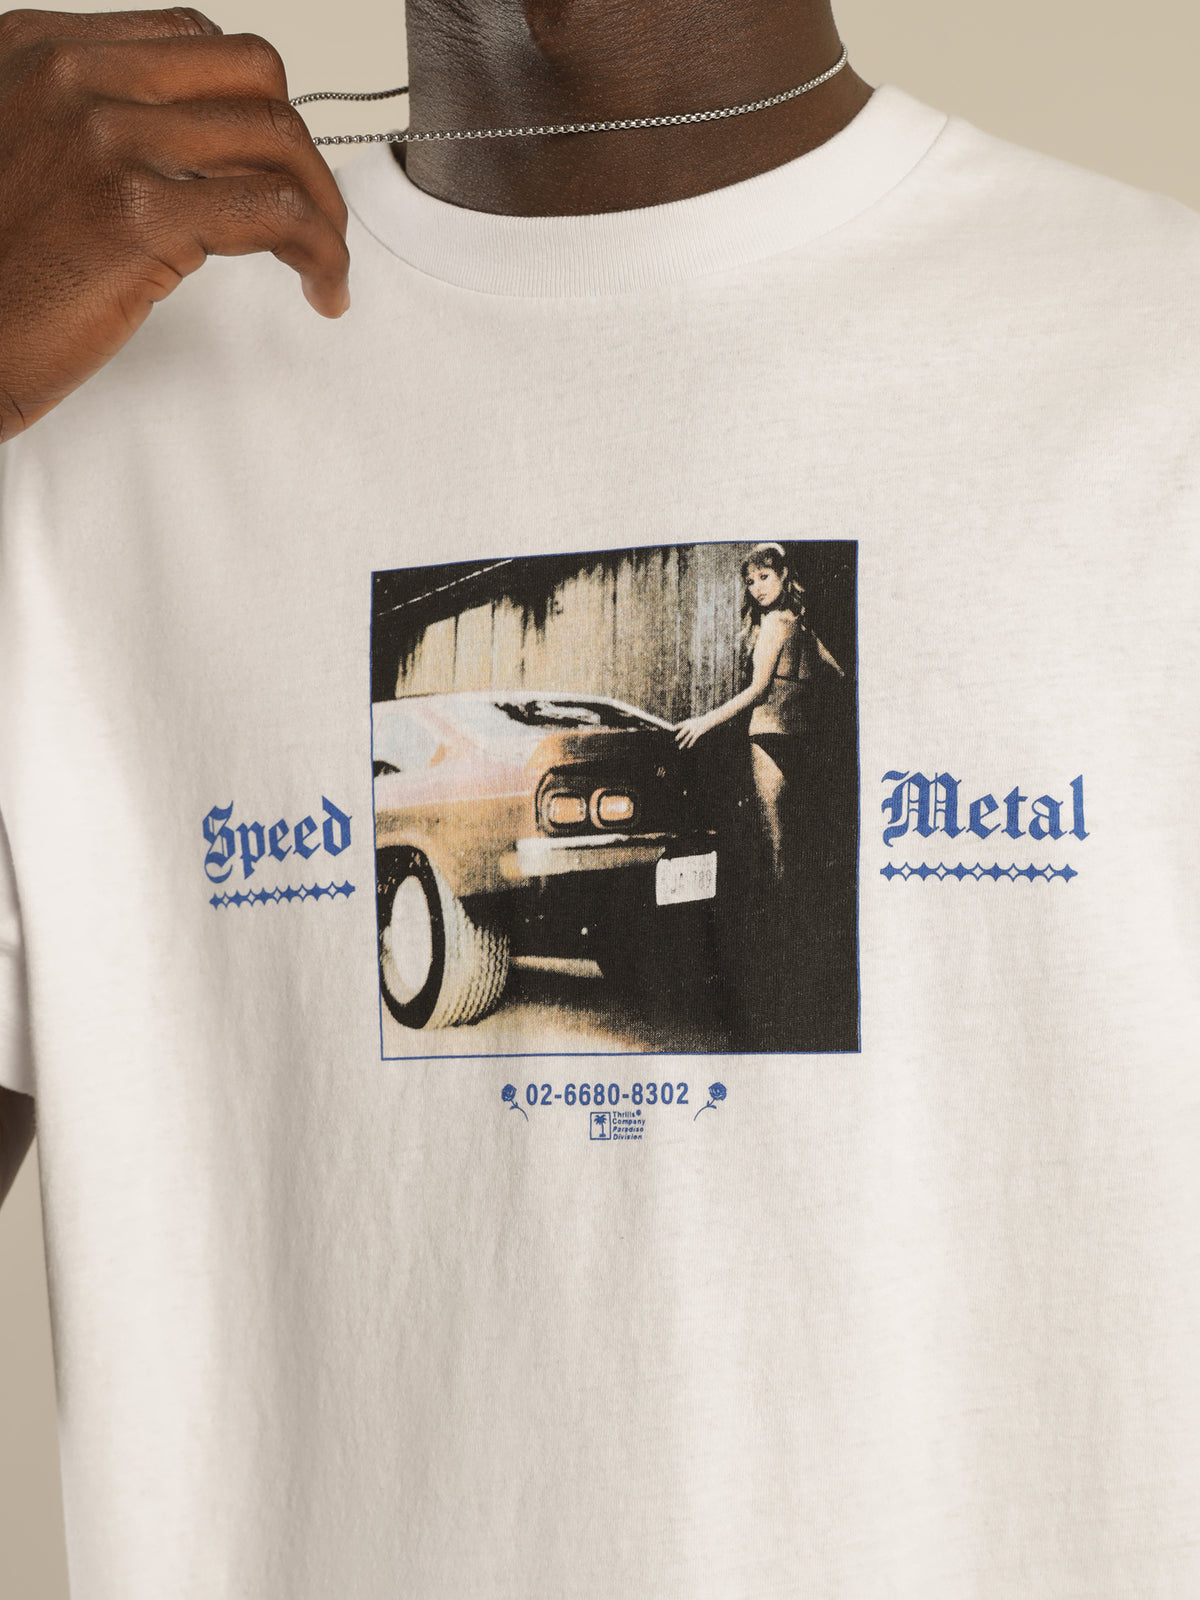 Speed Metal Merch Fit T-Shirt in White